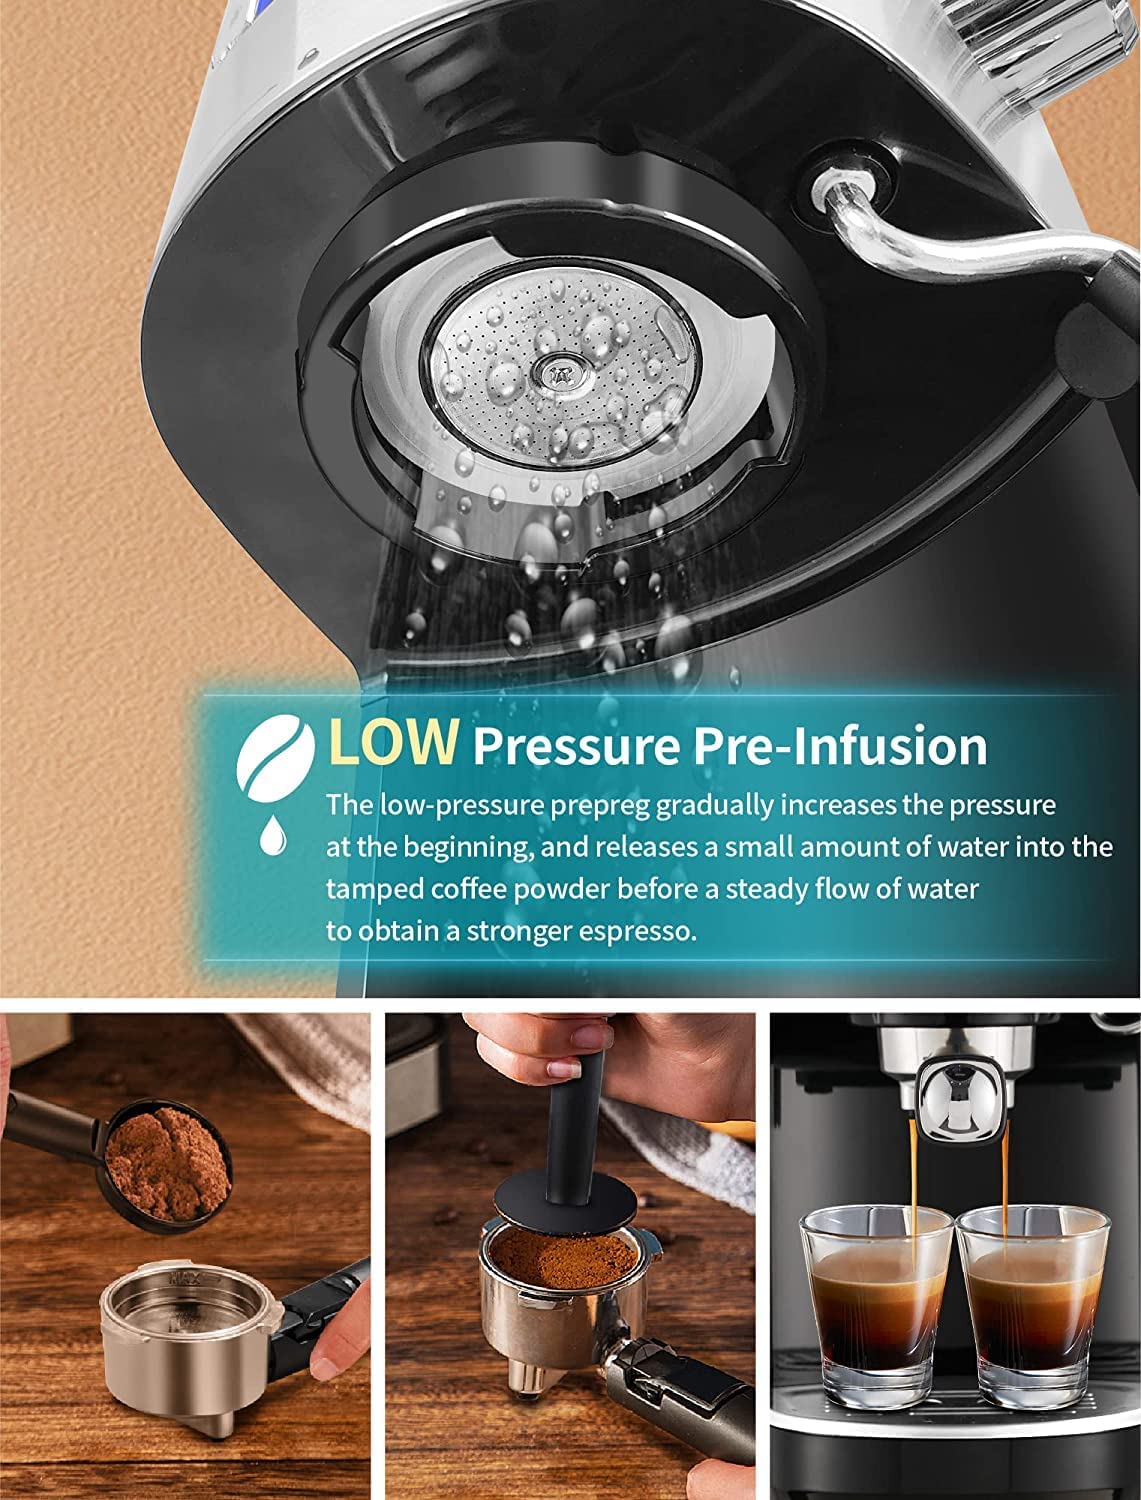 Gevi Espresso Machine with Fast Heating and Milk Frother GECME400BA-U( –  GEVI